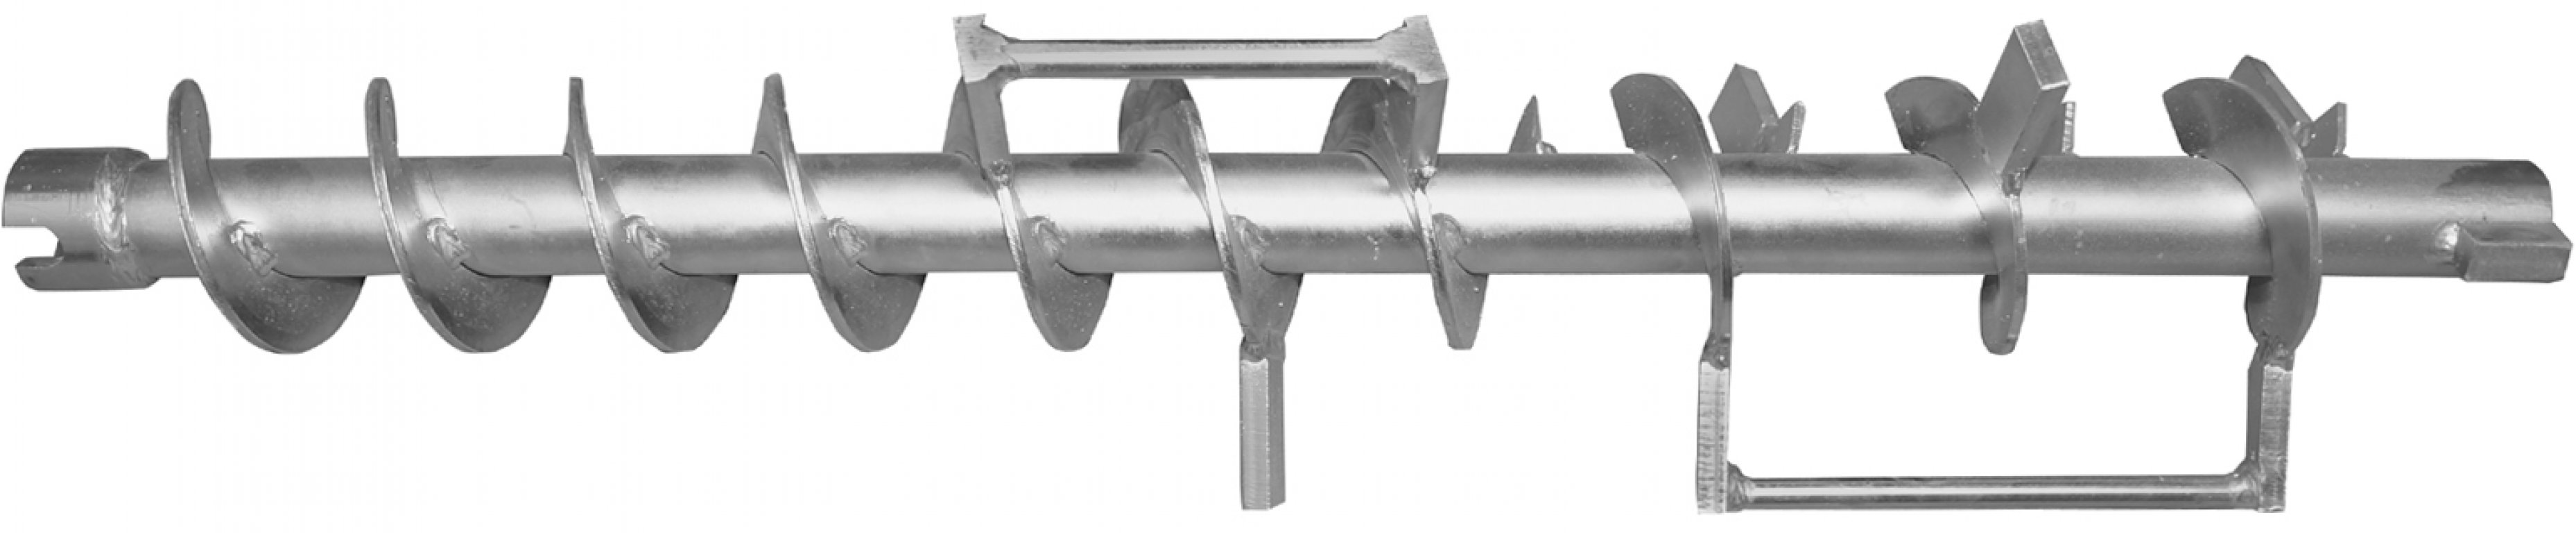 Steel metering shaft for inoMIX F100 - 60 l/min